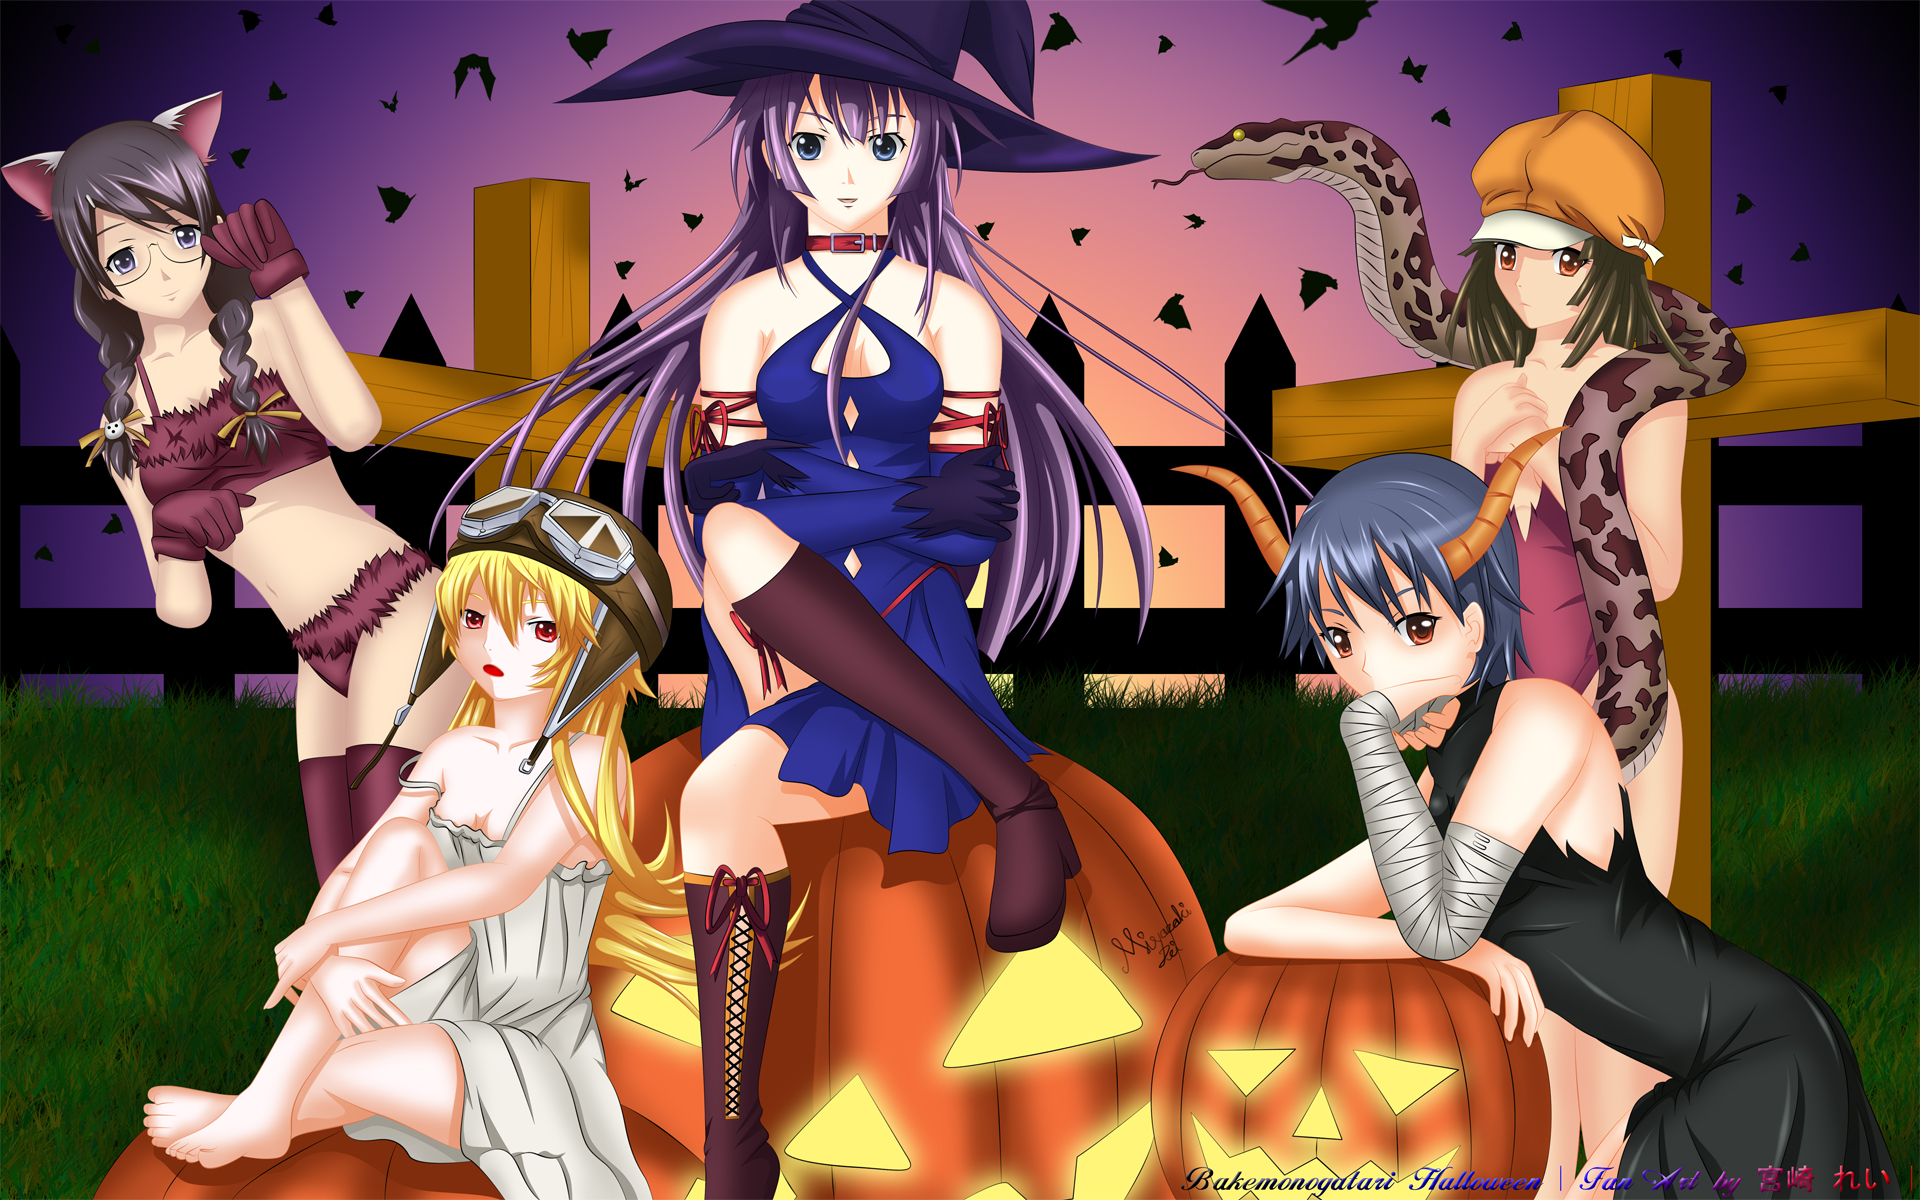 Anime characters from Monogatari Series in Halloween outfits: Hitagi, Shinobu, Tsubasa, Nadeko, and Suruga.